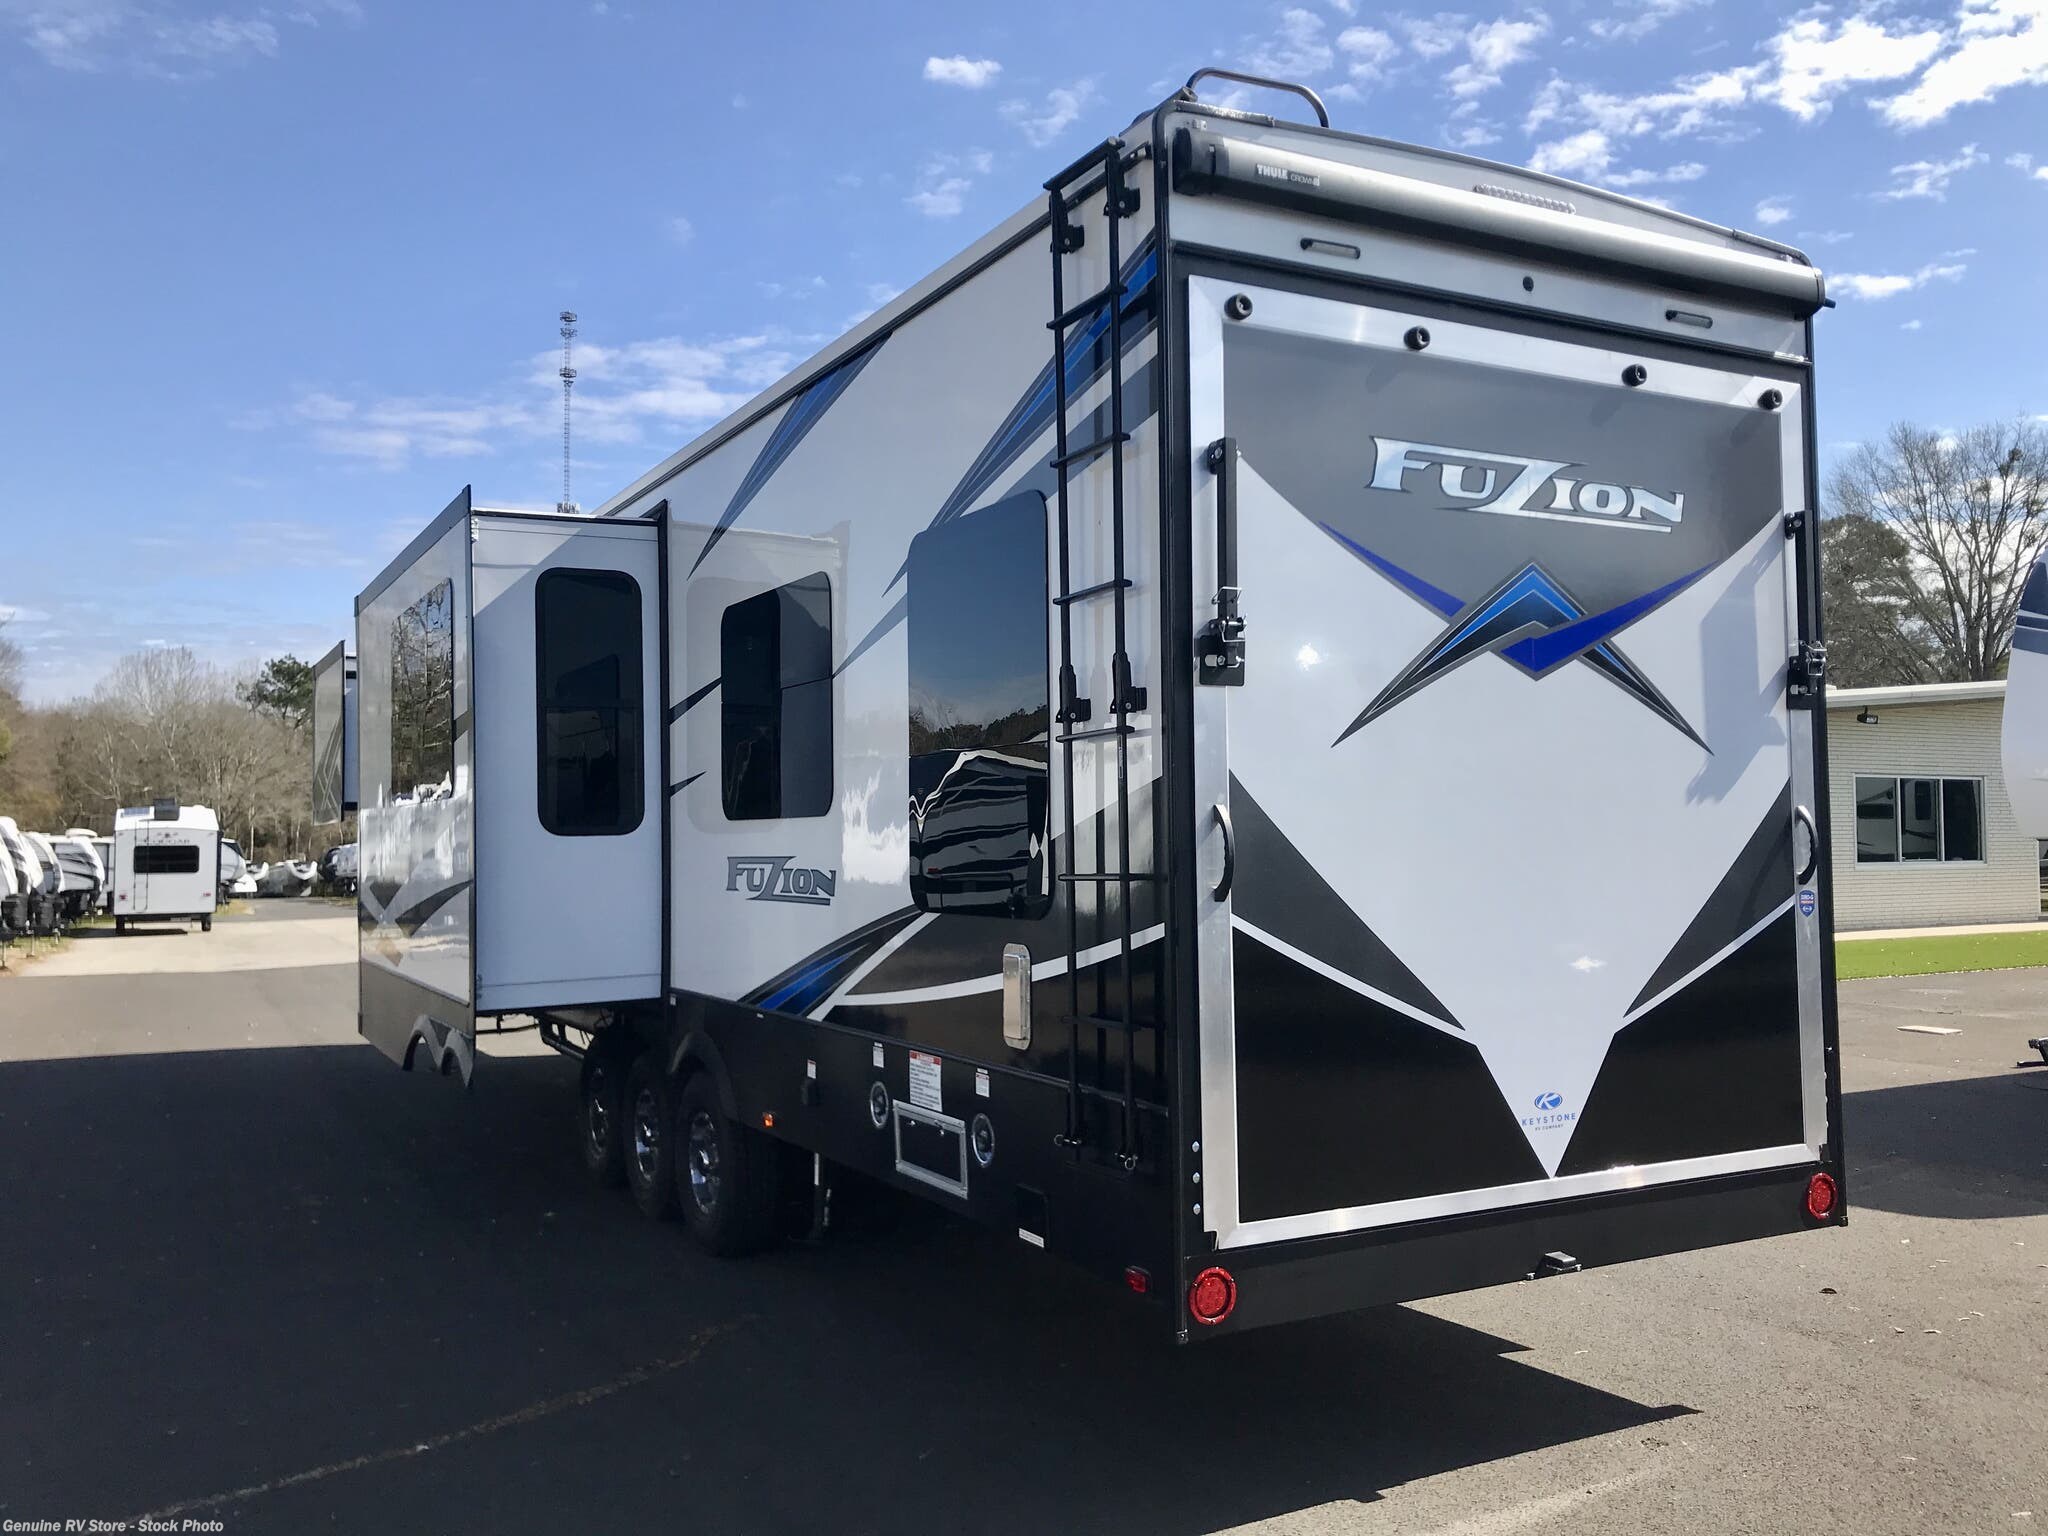 fuzion travel trailers for sale